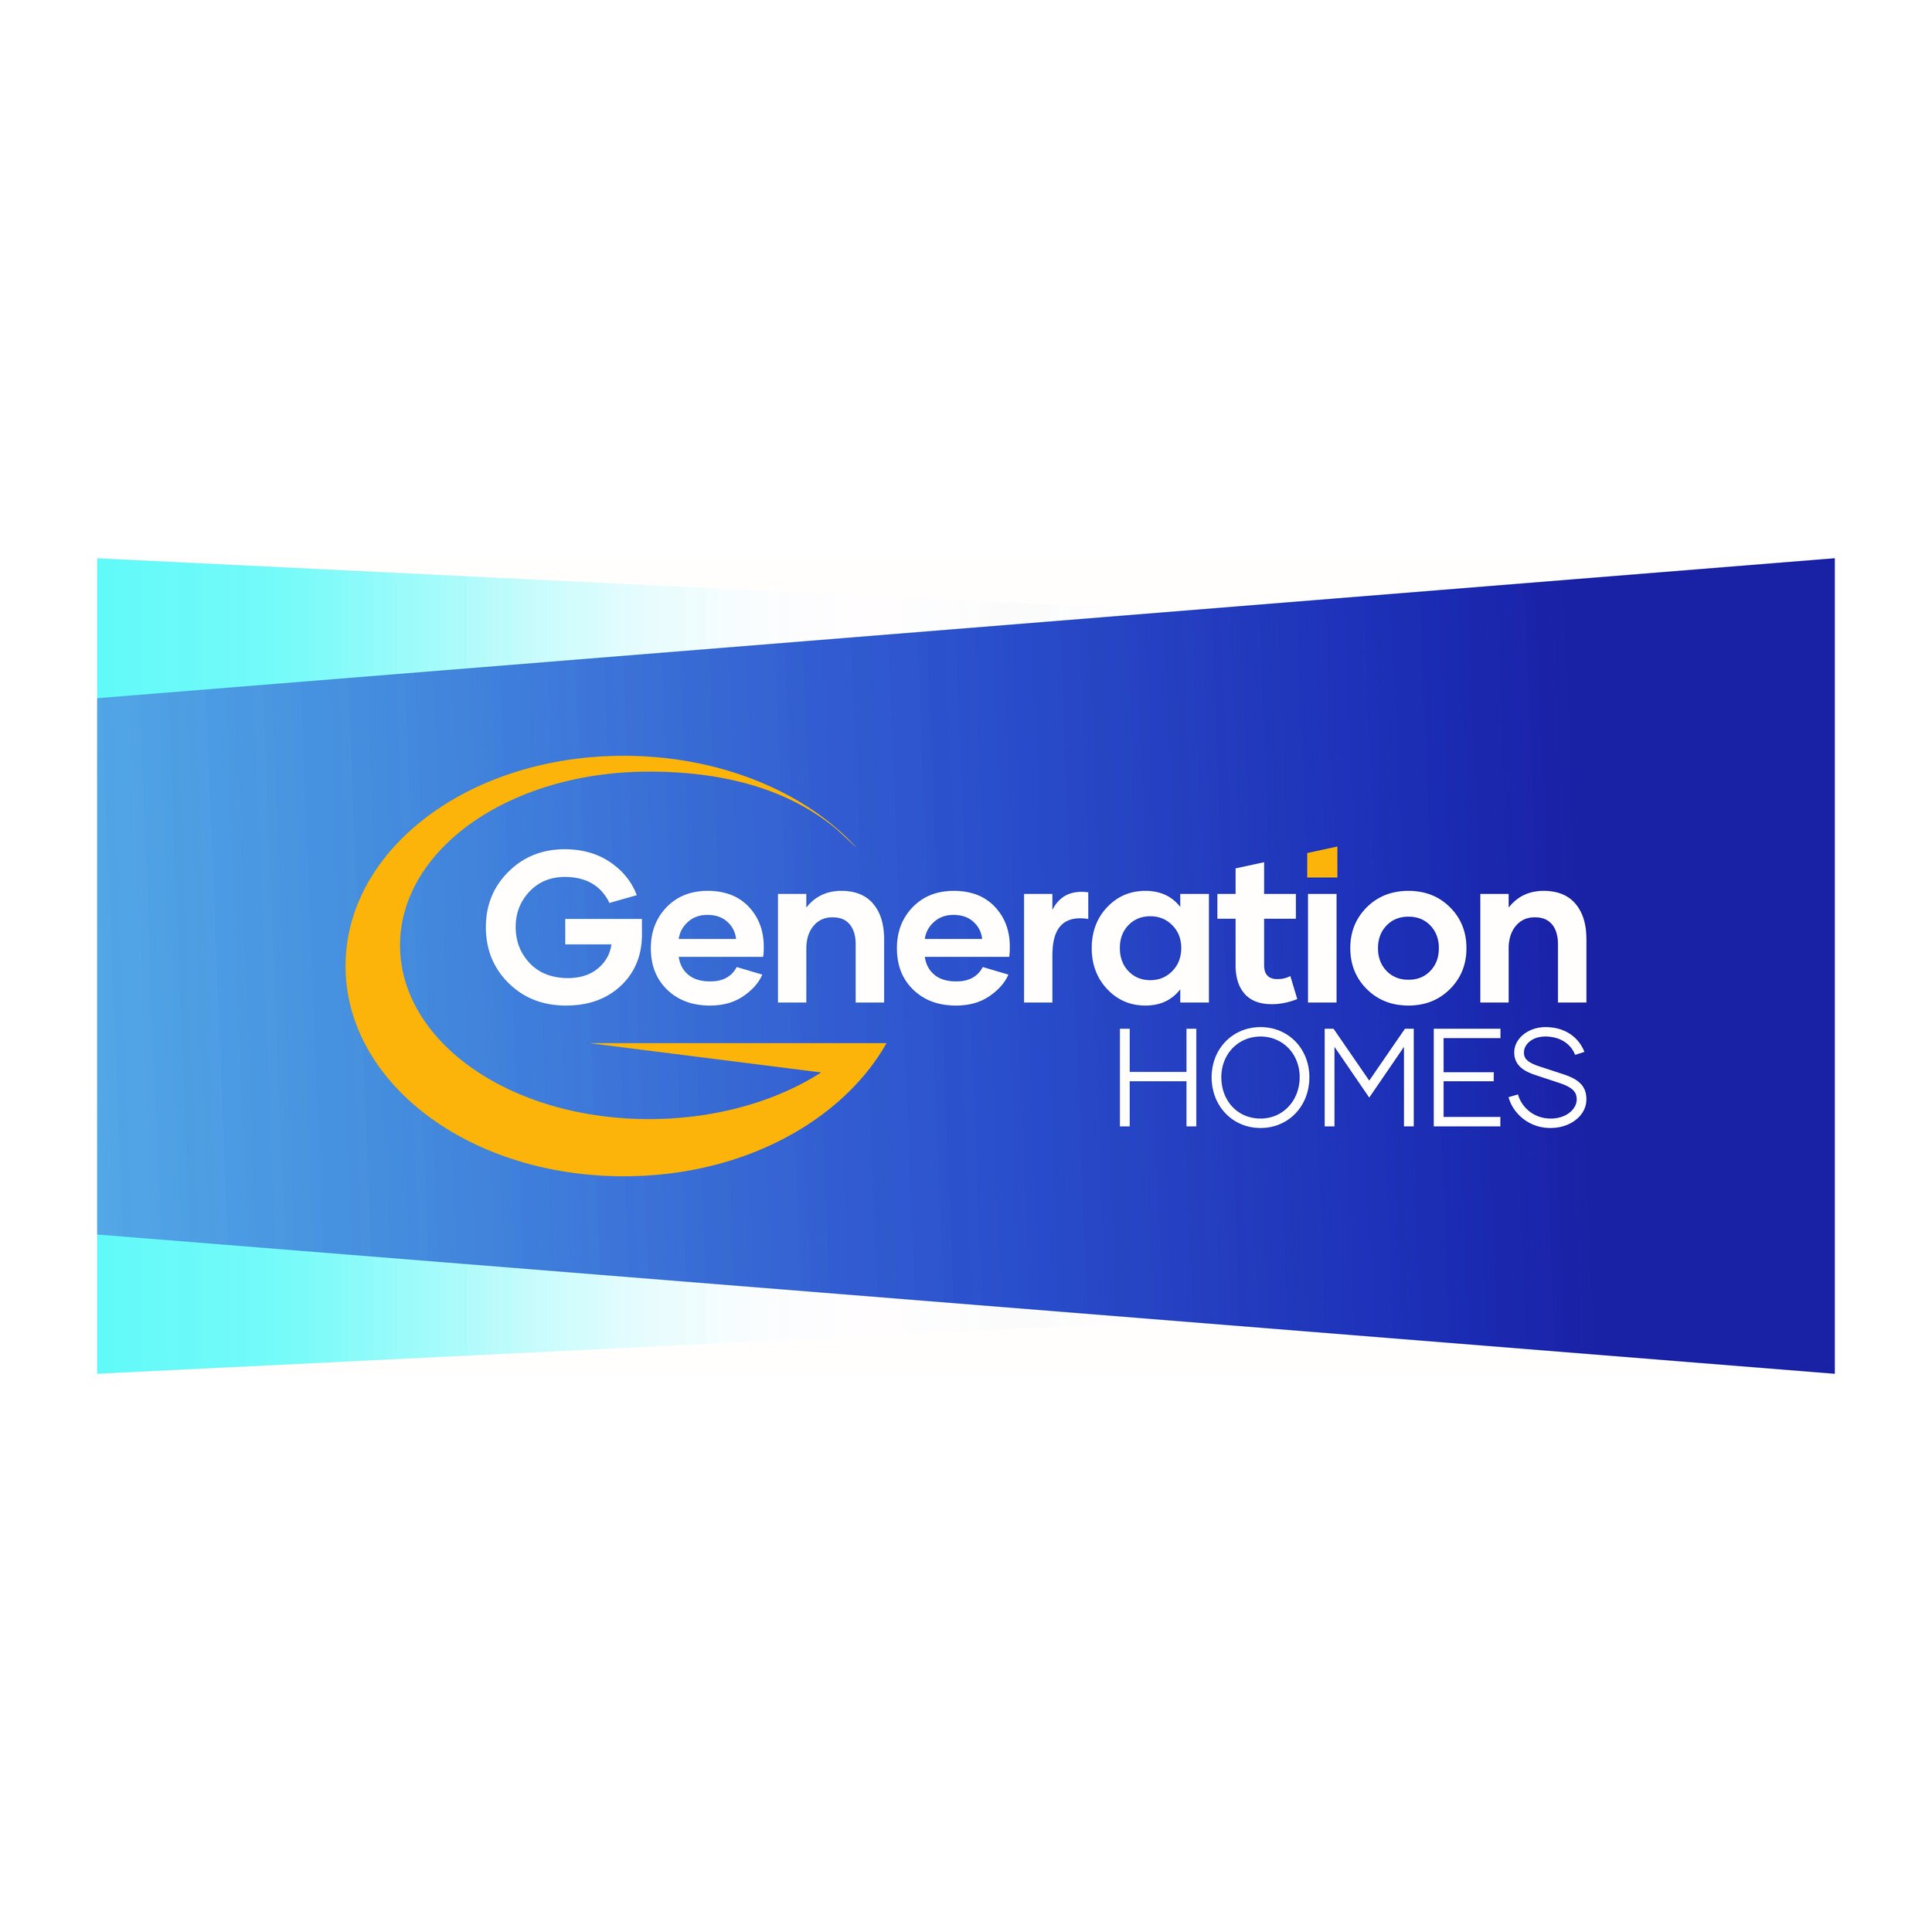 Generation Homes WEB.jpg